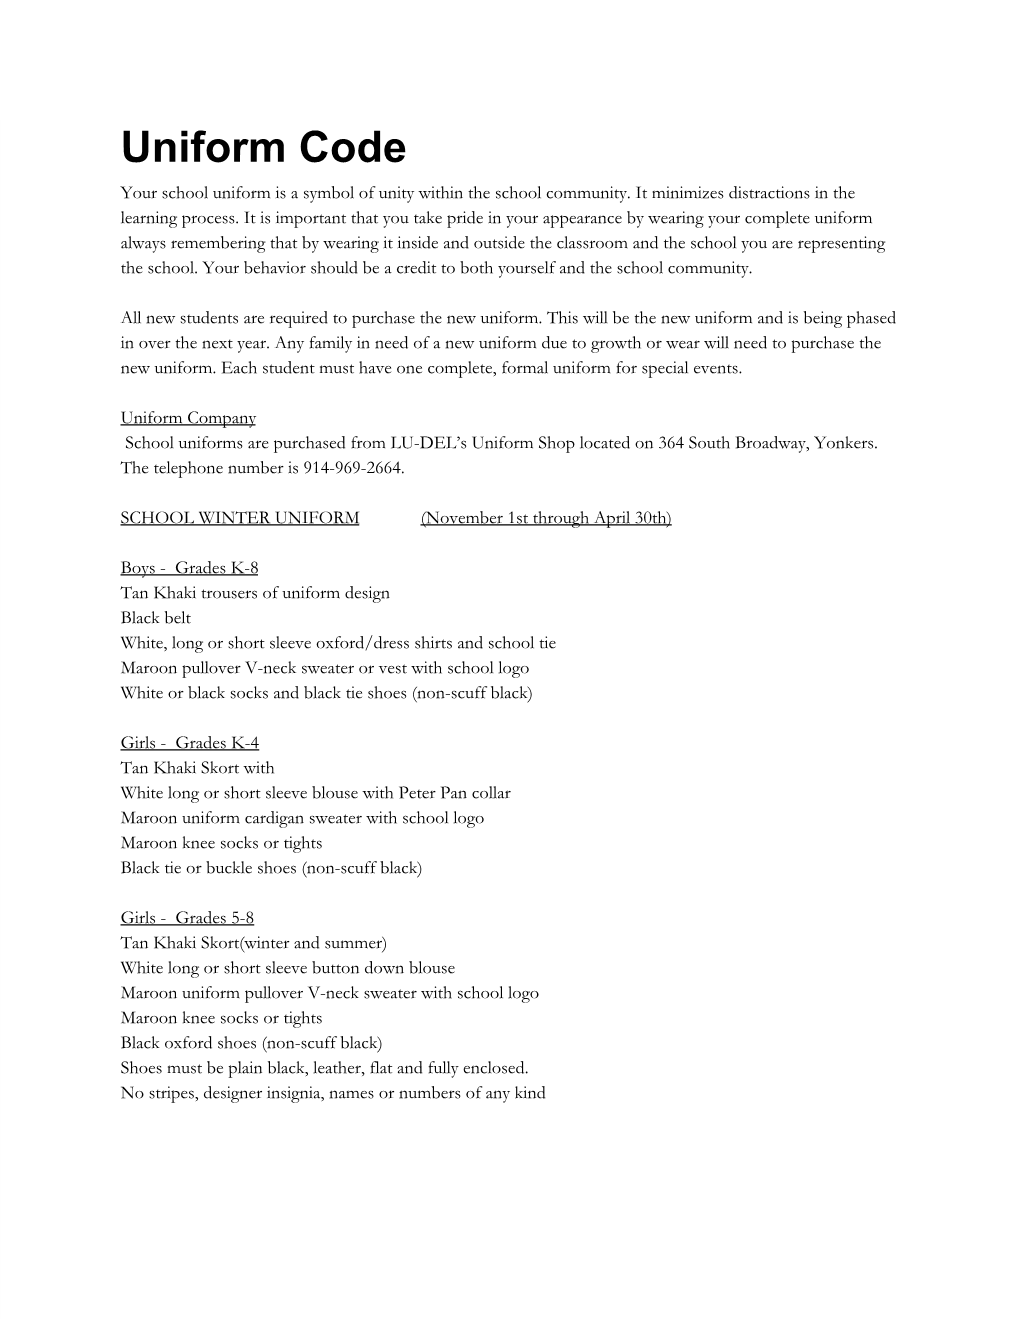 Uniform Code Your School Uniform Is a Symbol of Unity Within the School Community